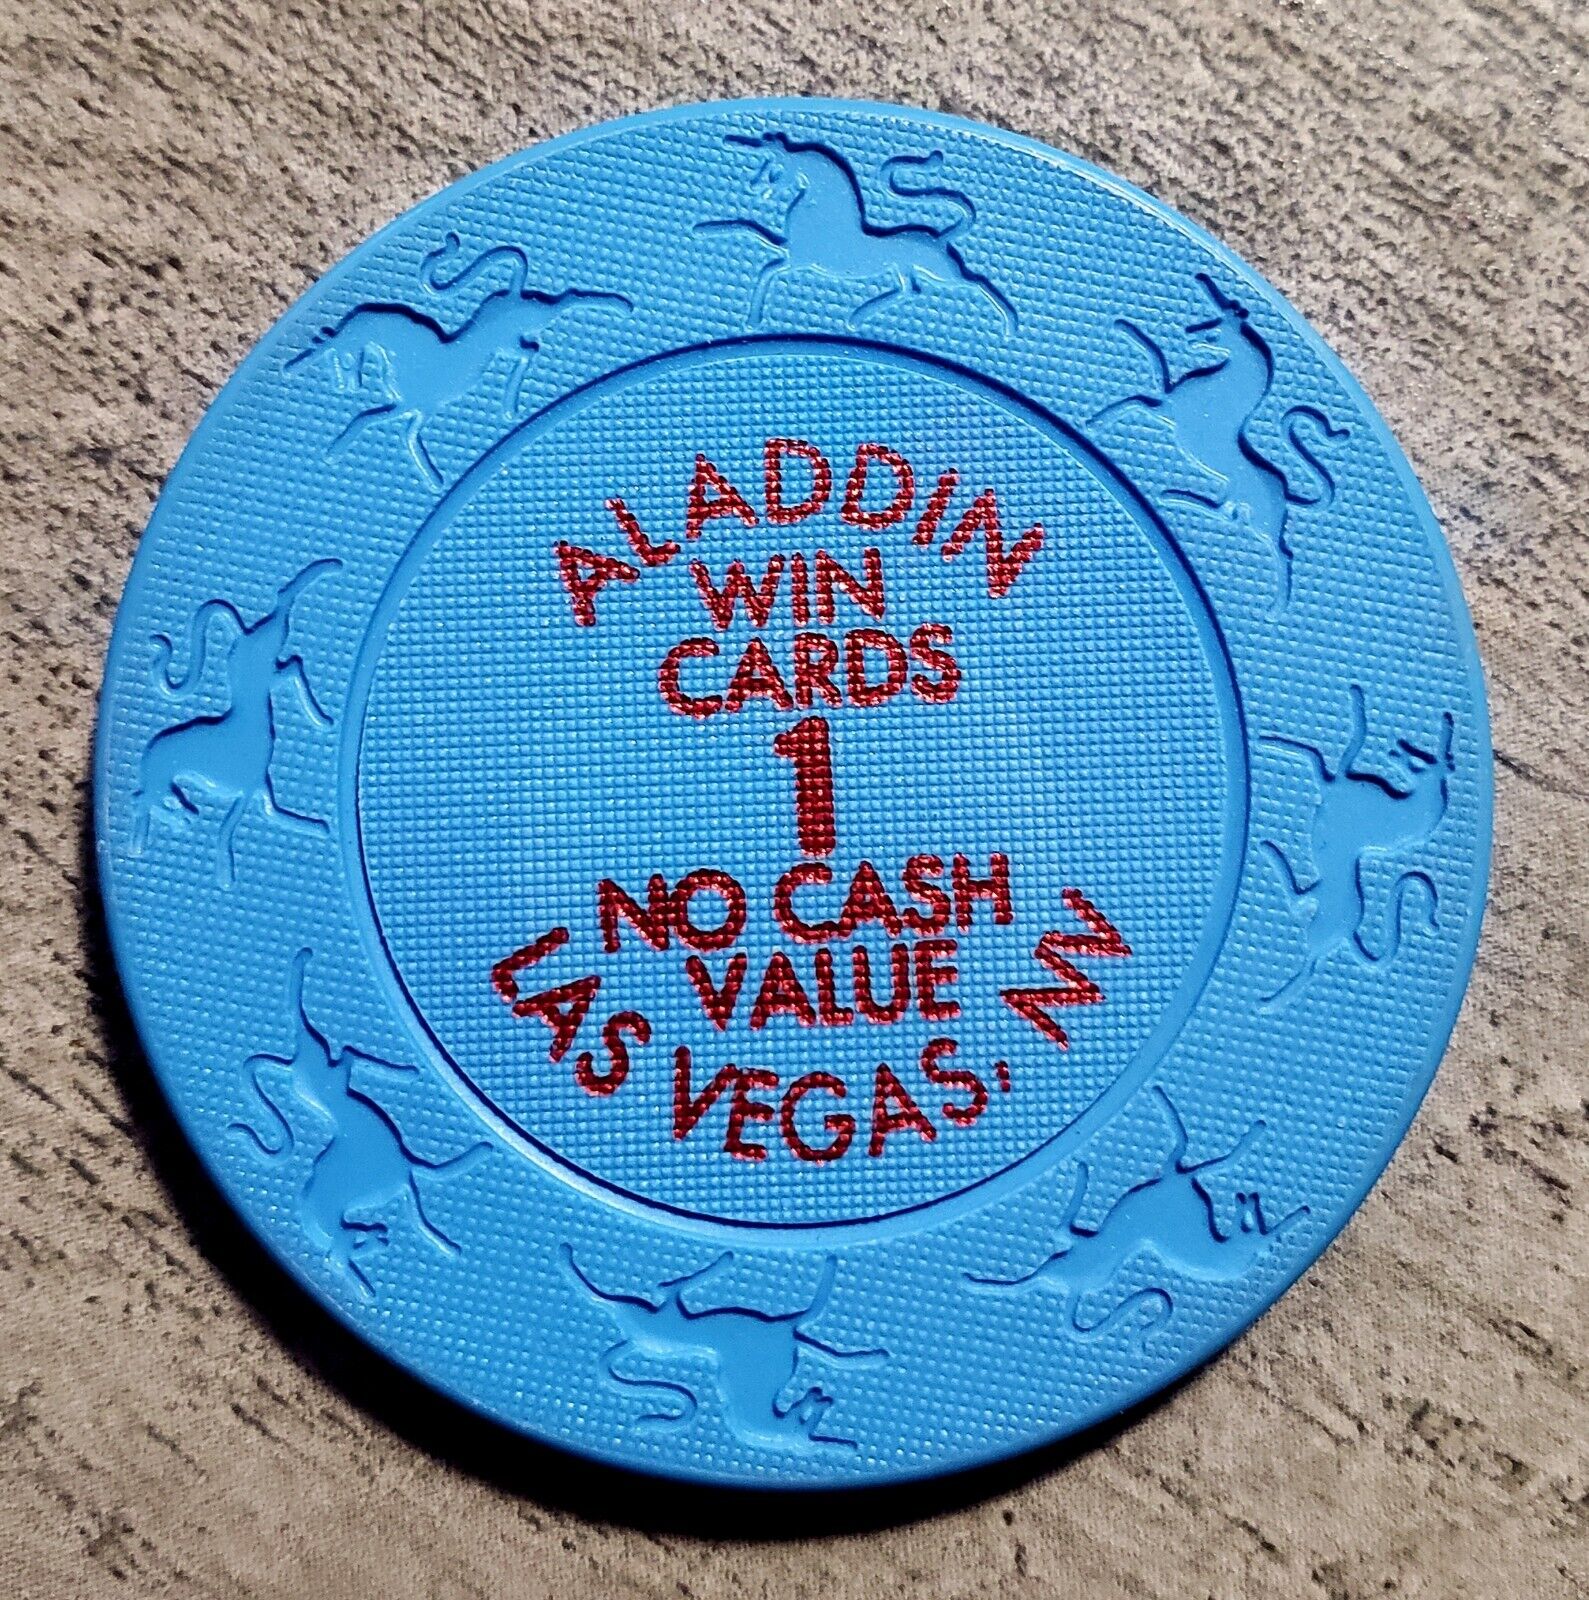 $1 Aladdin Casino Win Cards NCV Chip - Las Vegas, Nevada **RARE**   